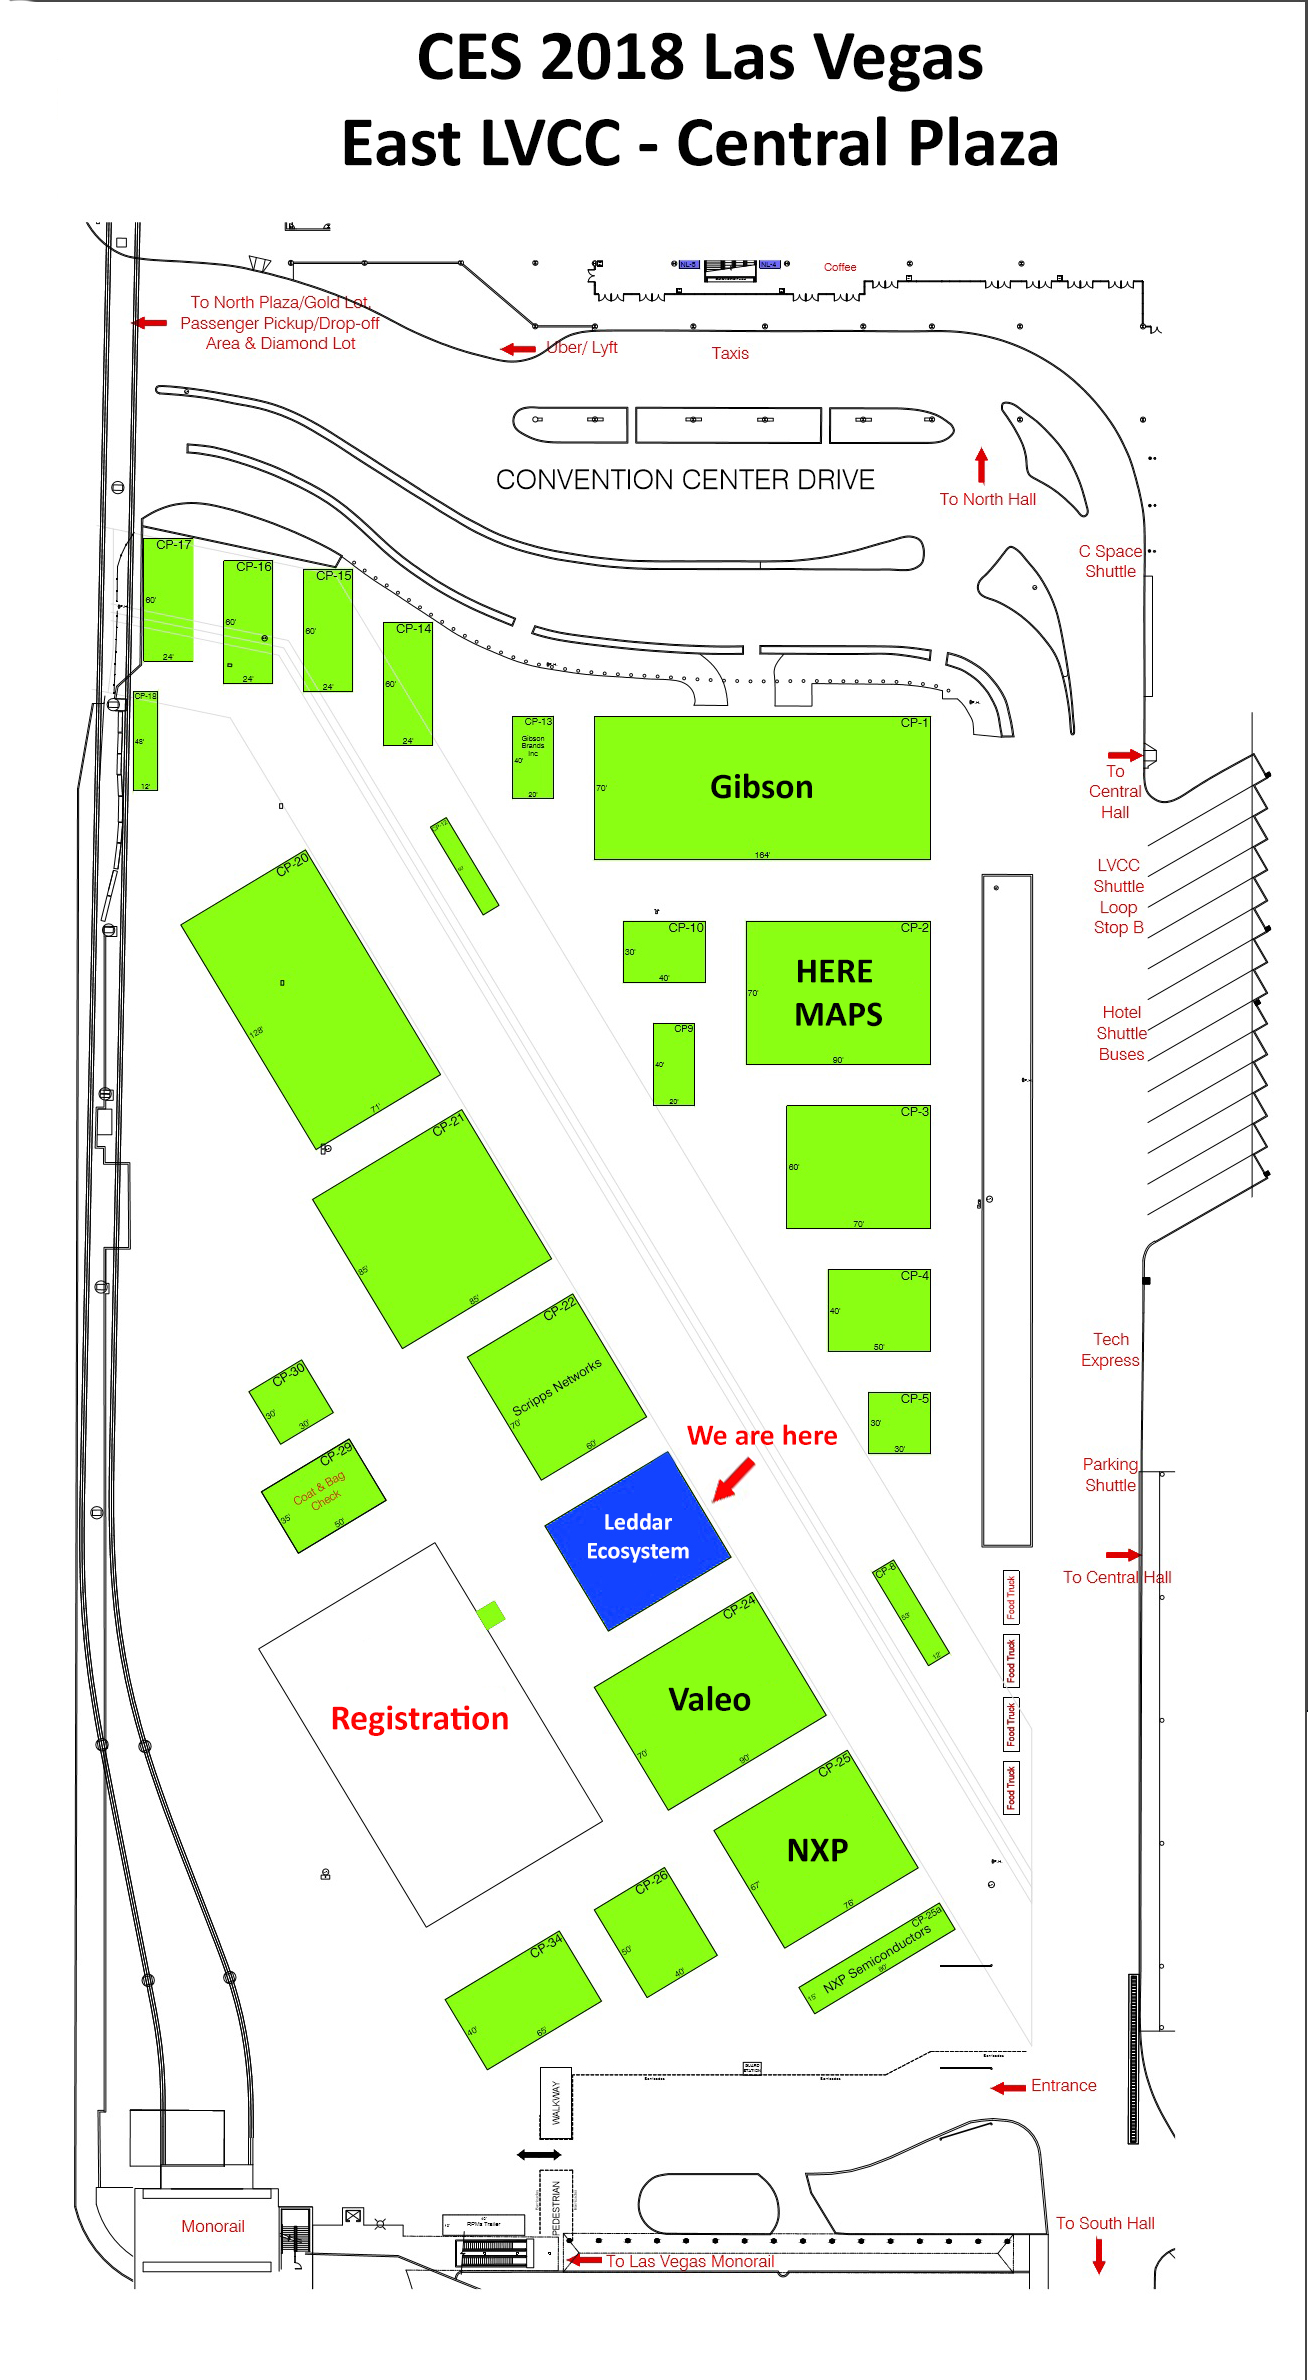 CES 2018 East LVCC - Central Plaza Map